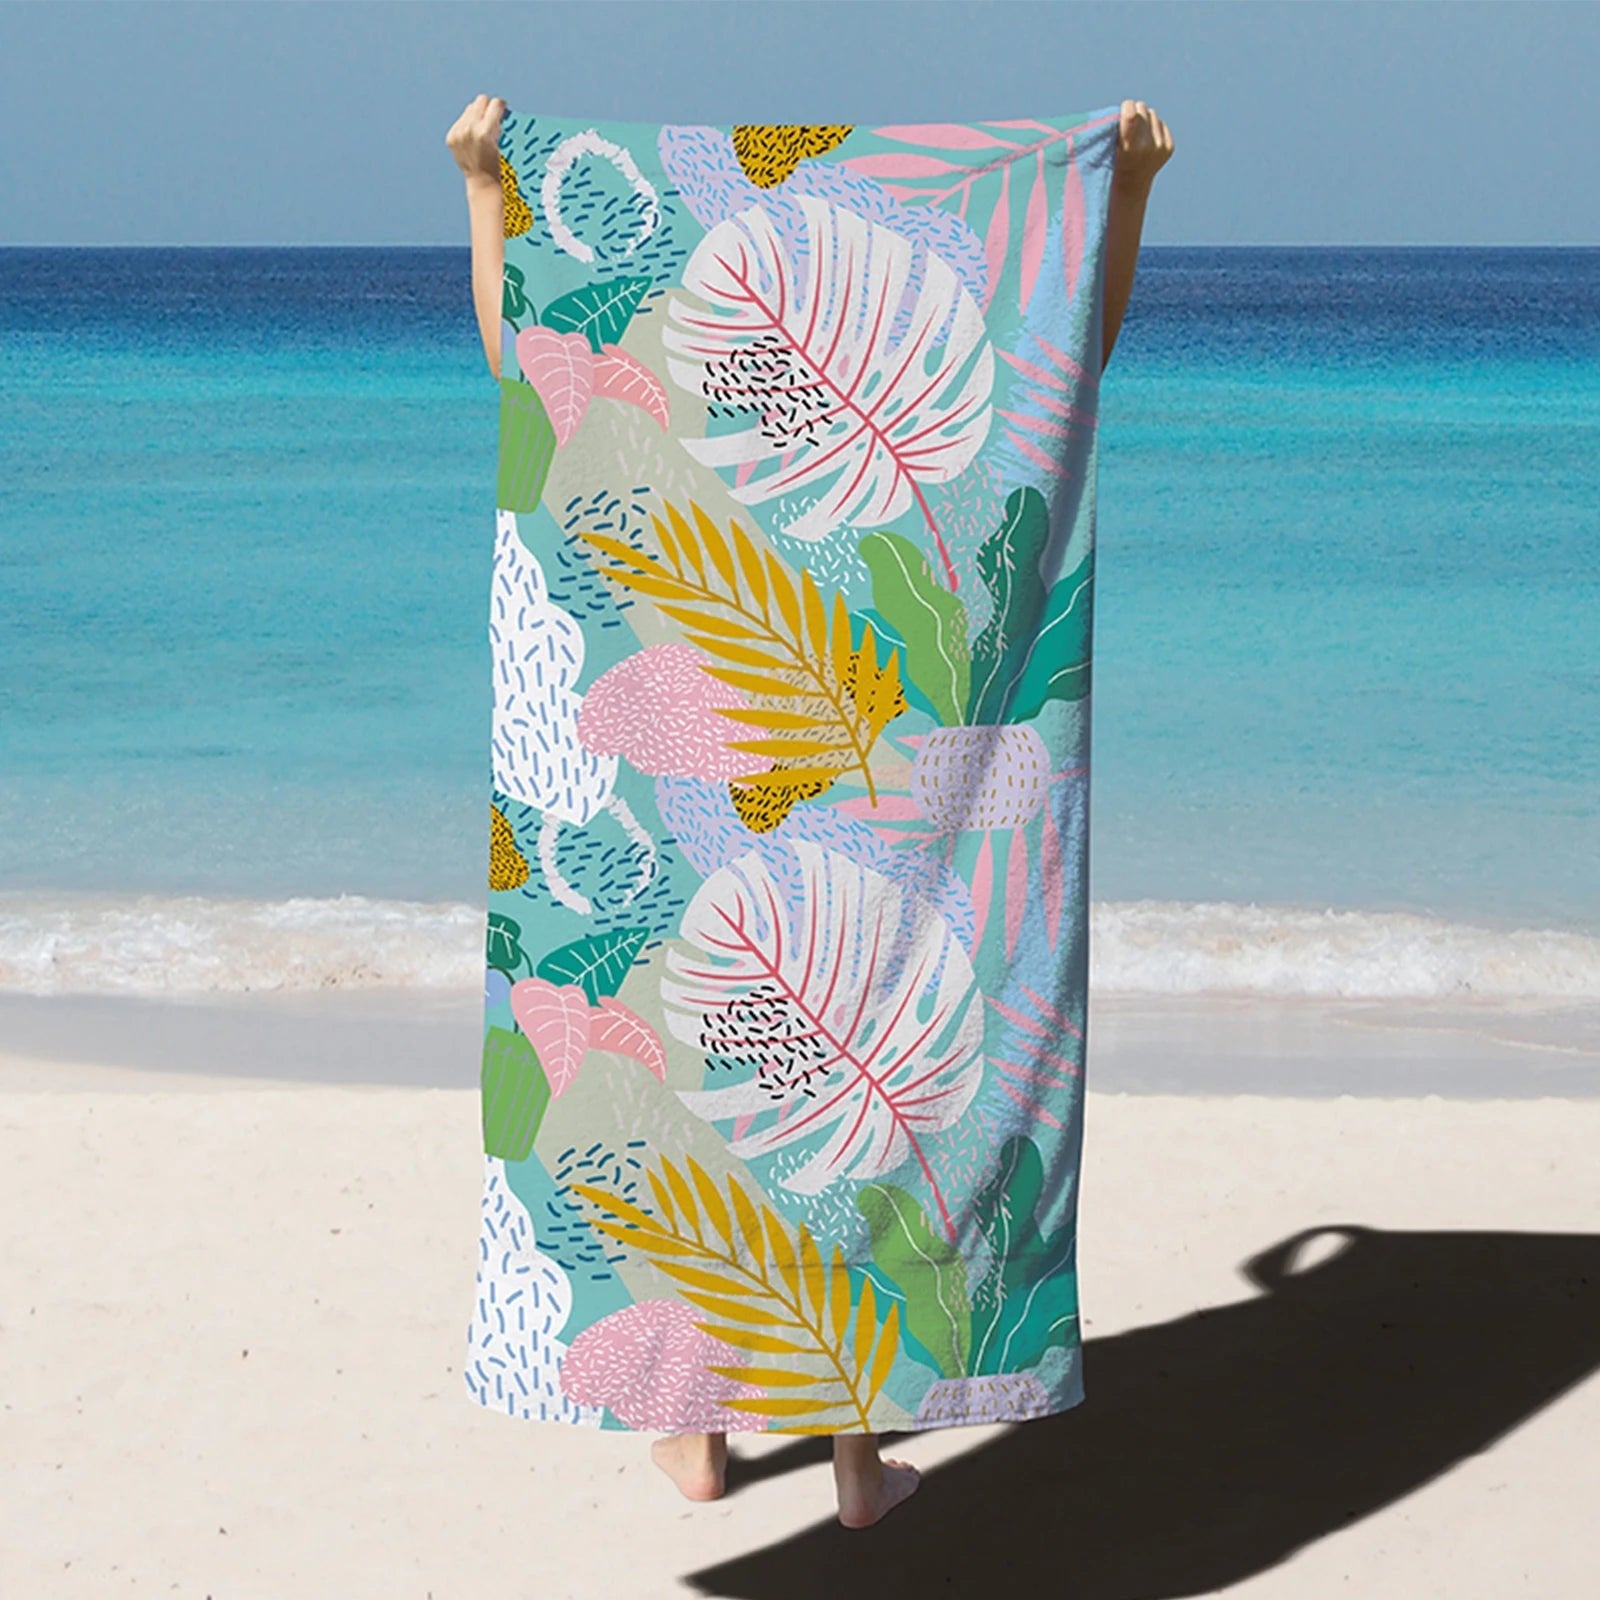 Quick-Dry Microfiber Beach Towel: Oversized, Super Absorbent Weeds Beachwear Australia